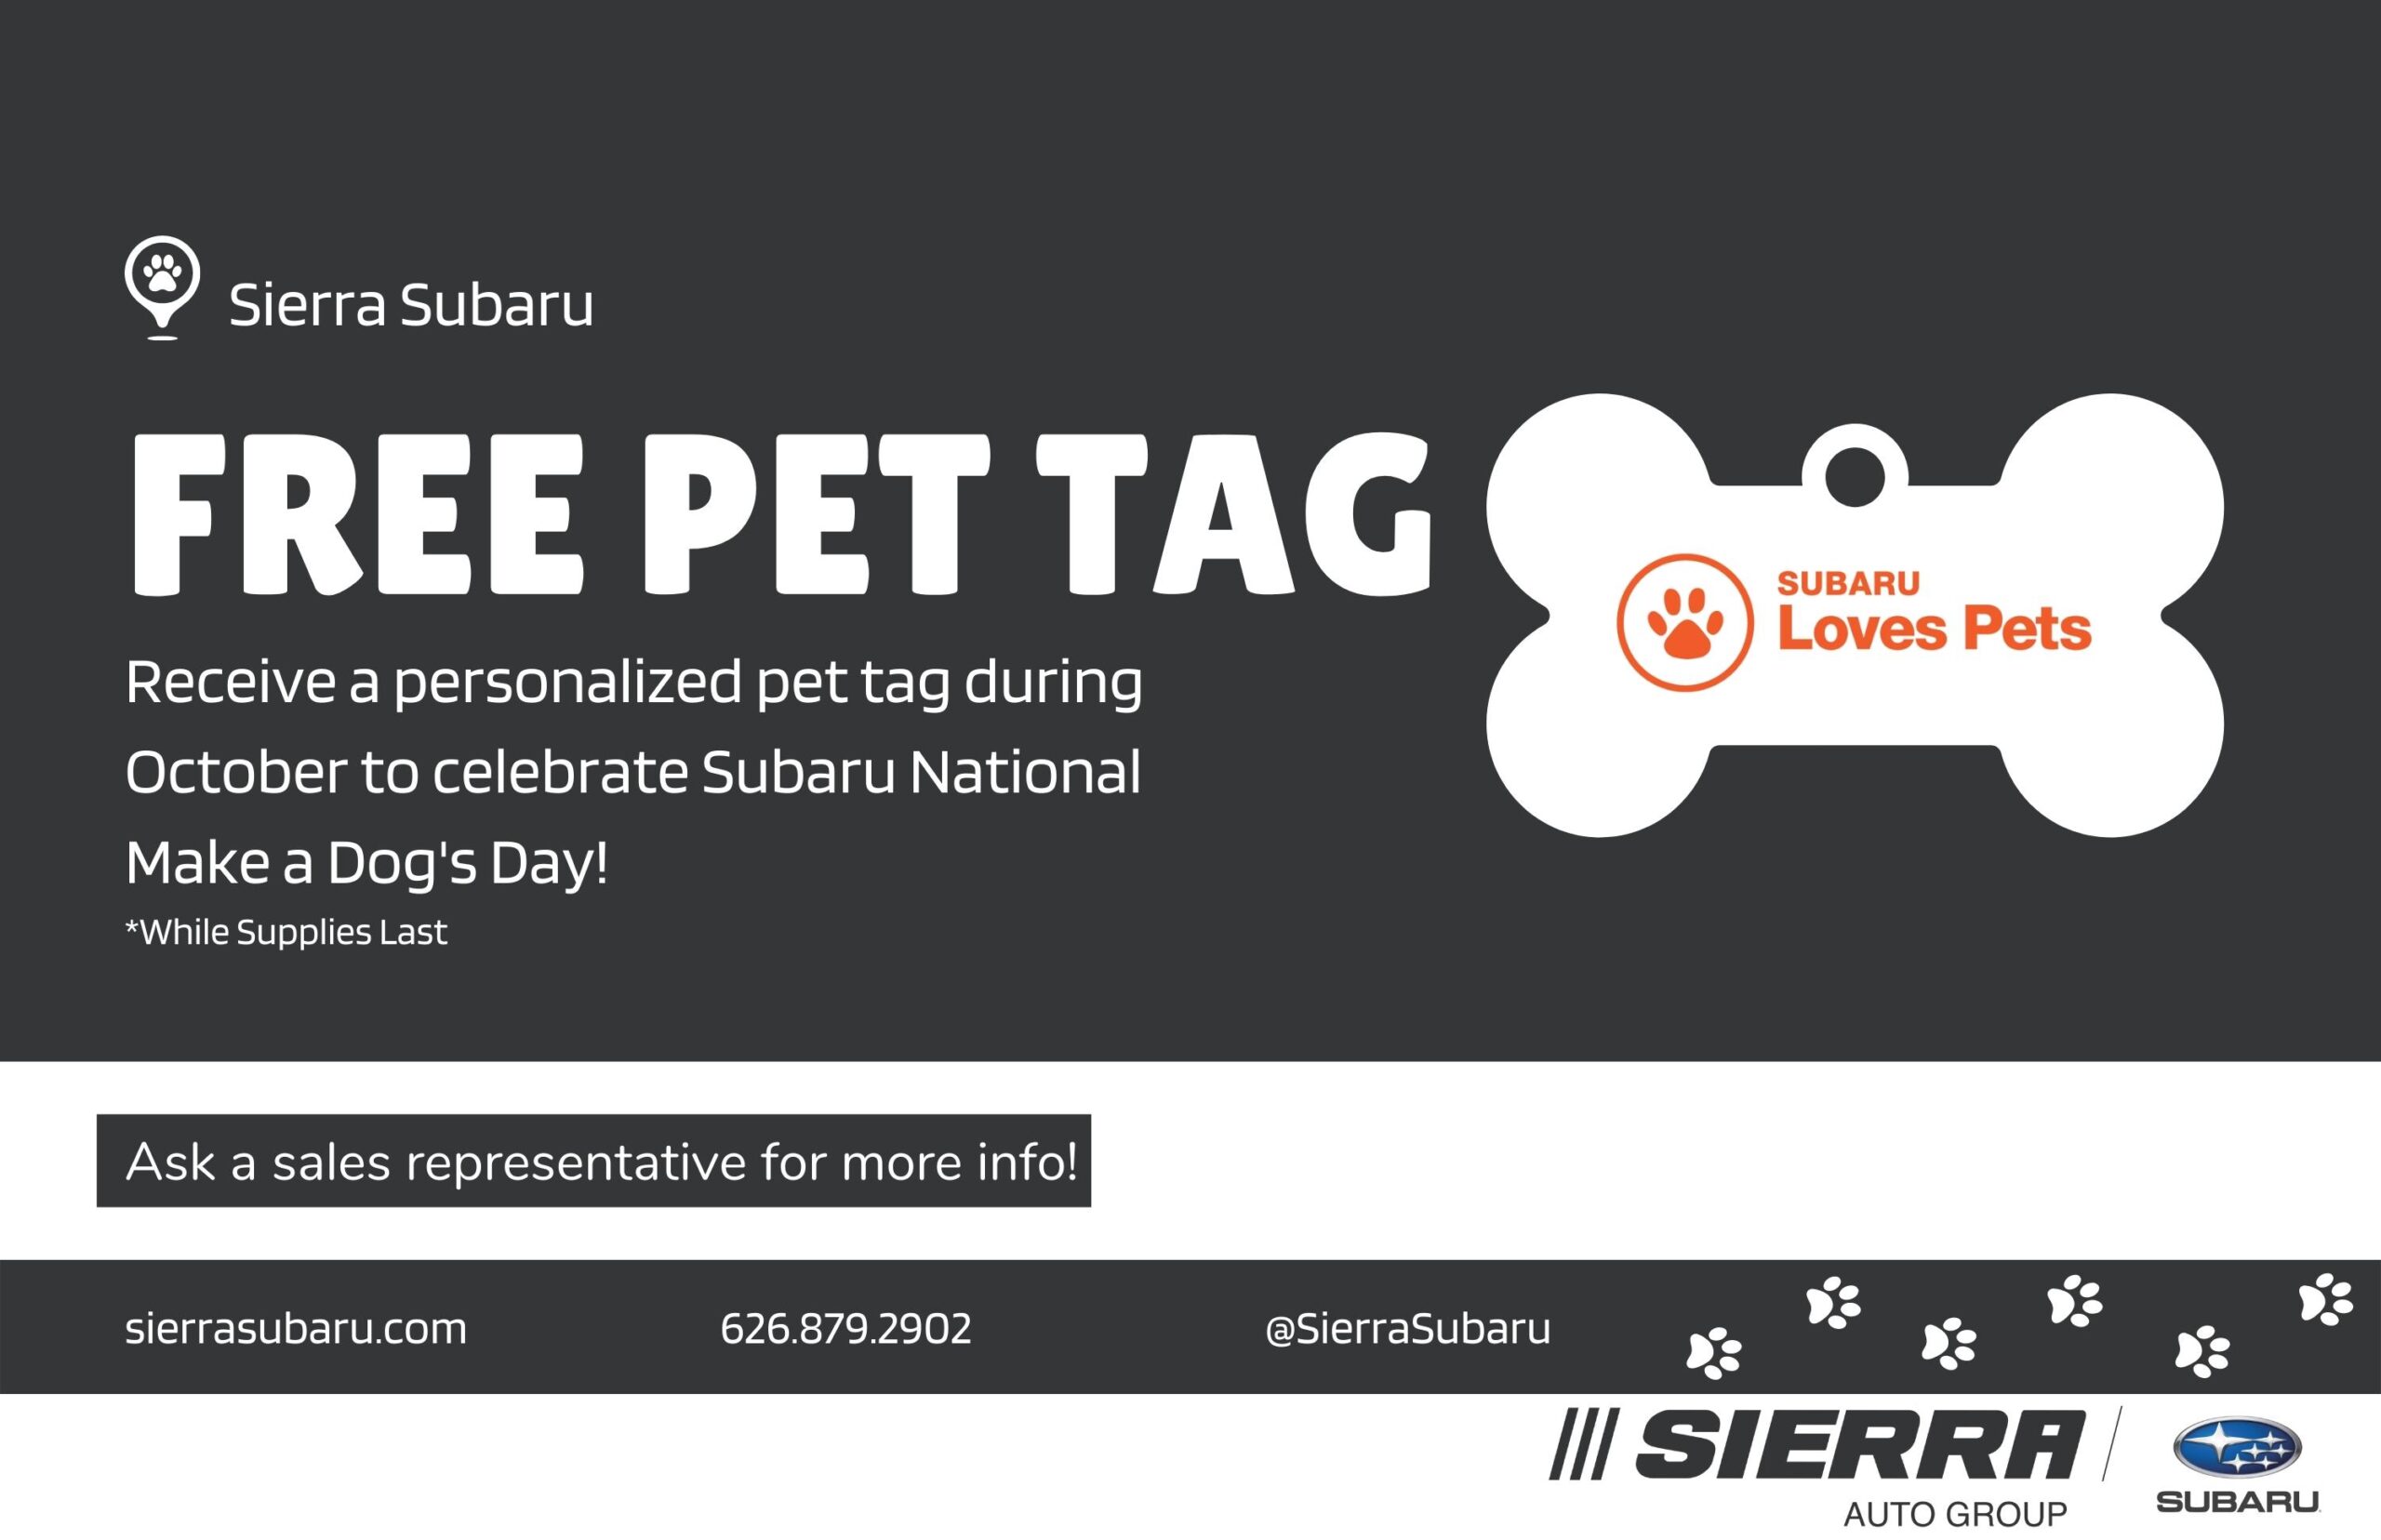 free pet tag from Sierra Subanu